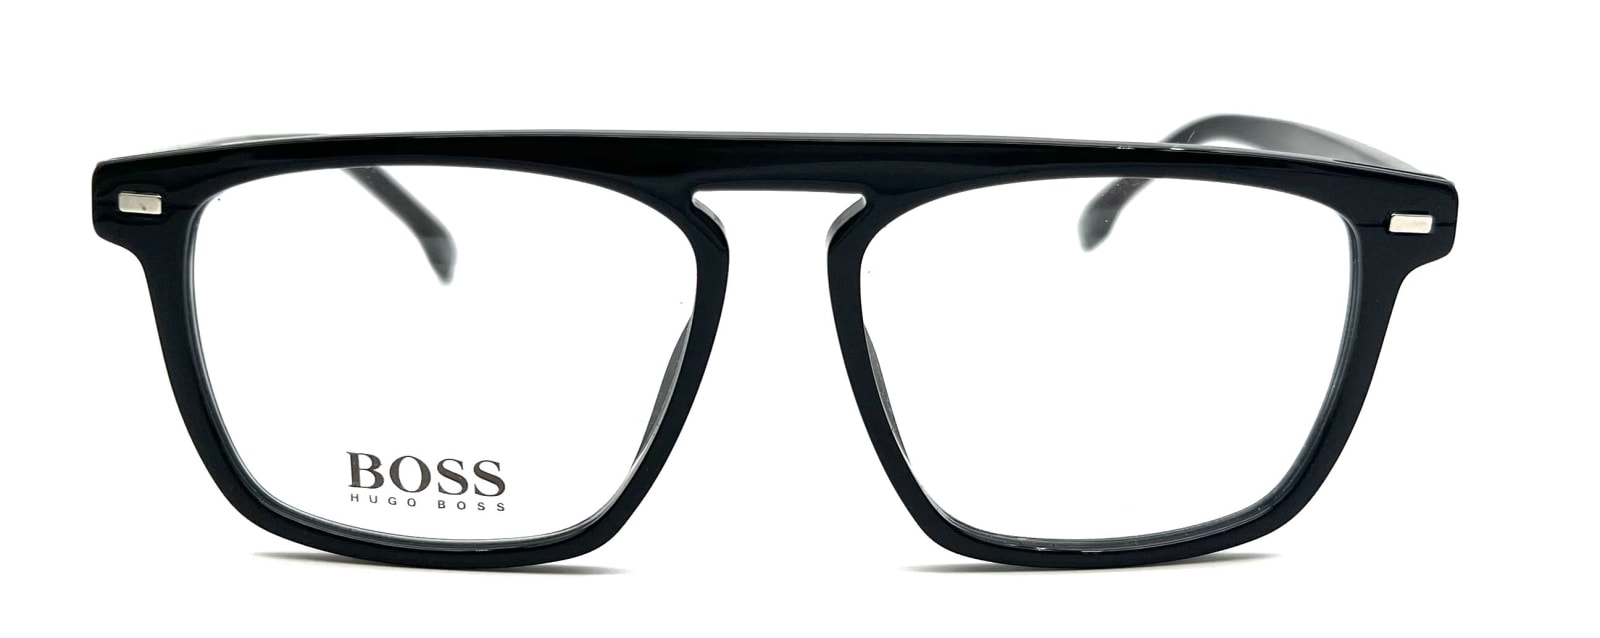 BOSS 1128 Eyewear